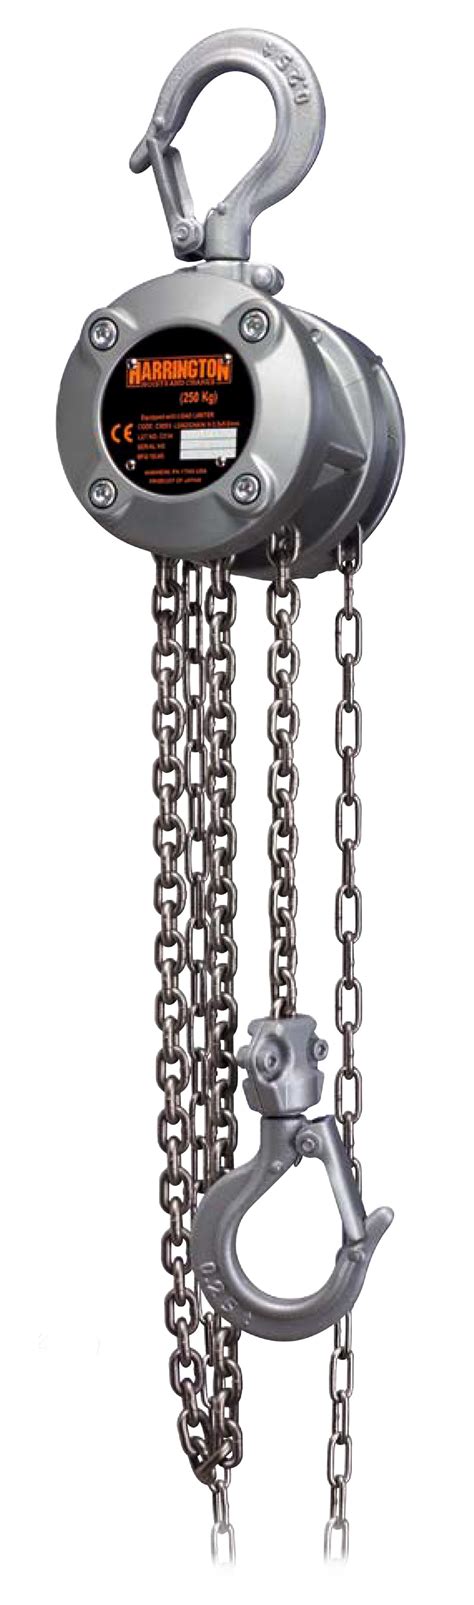 14 Ton Harrington Cx Series Mini Hand Chain Hoist 10 Ft Lift Part